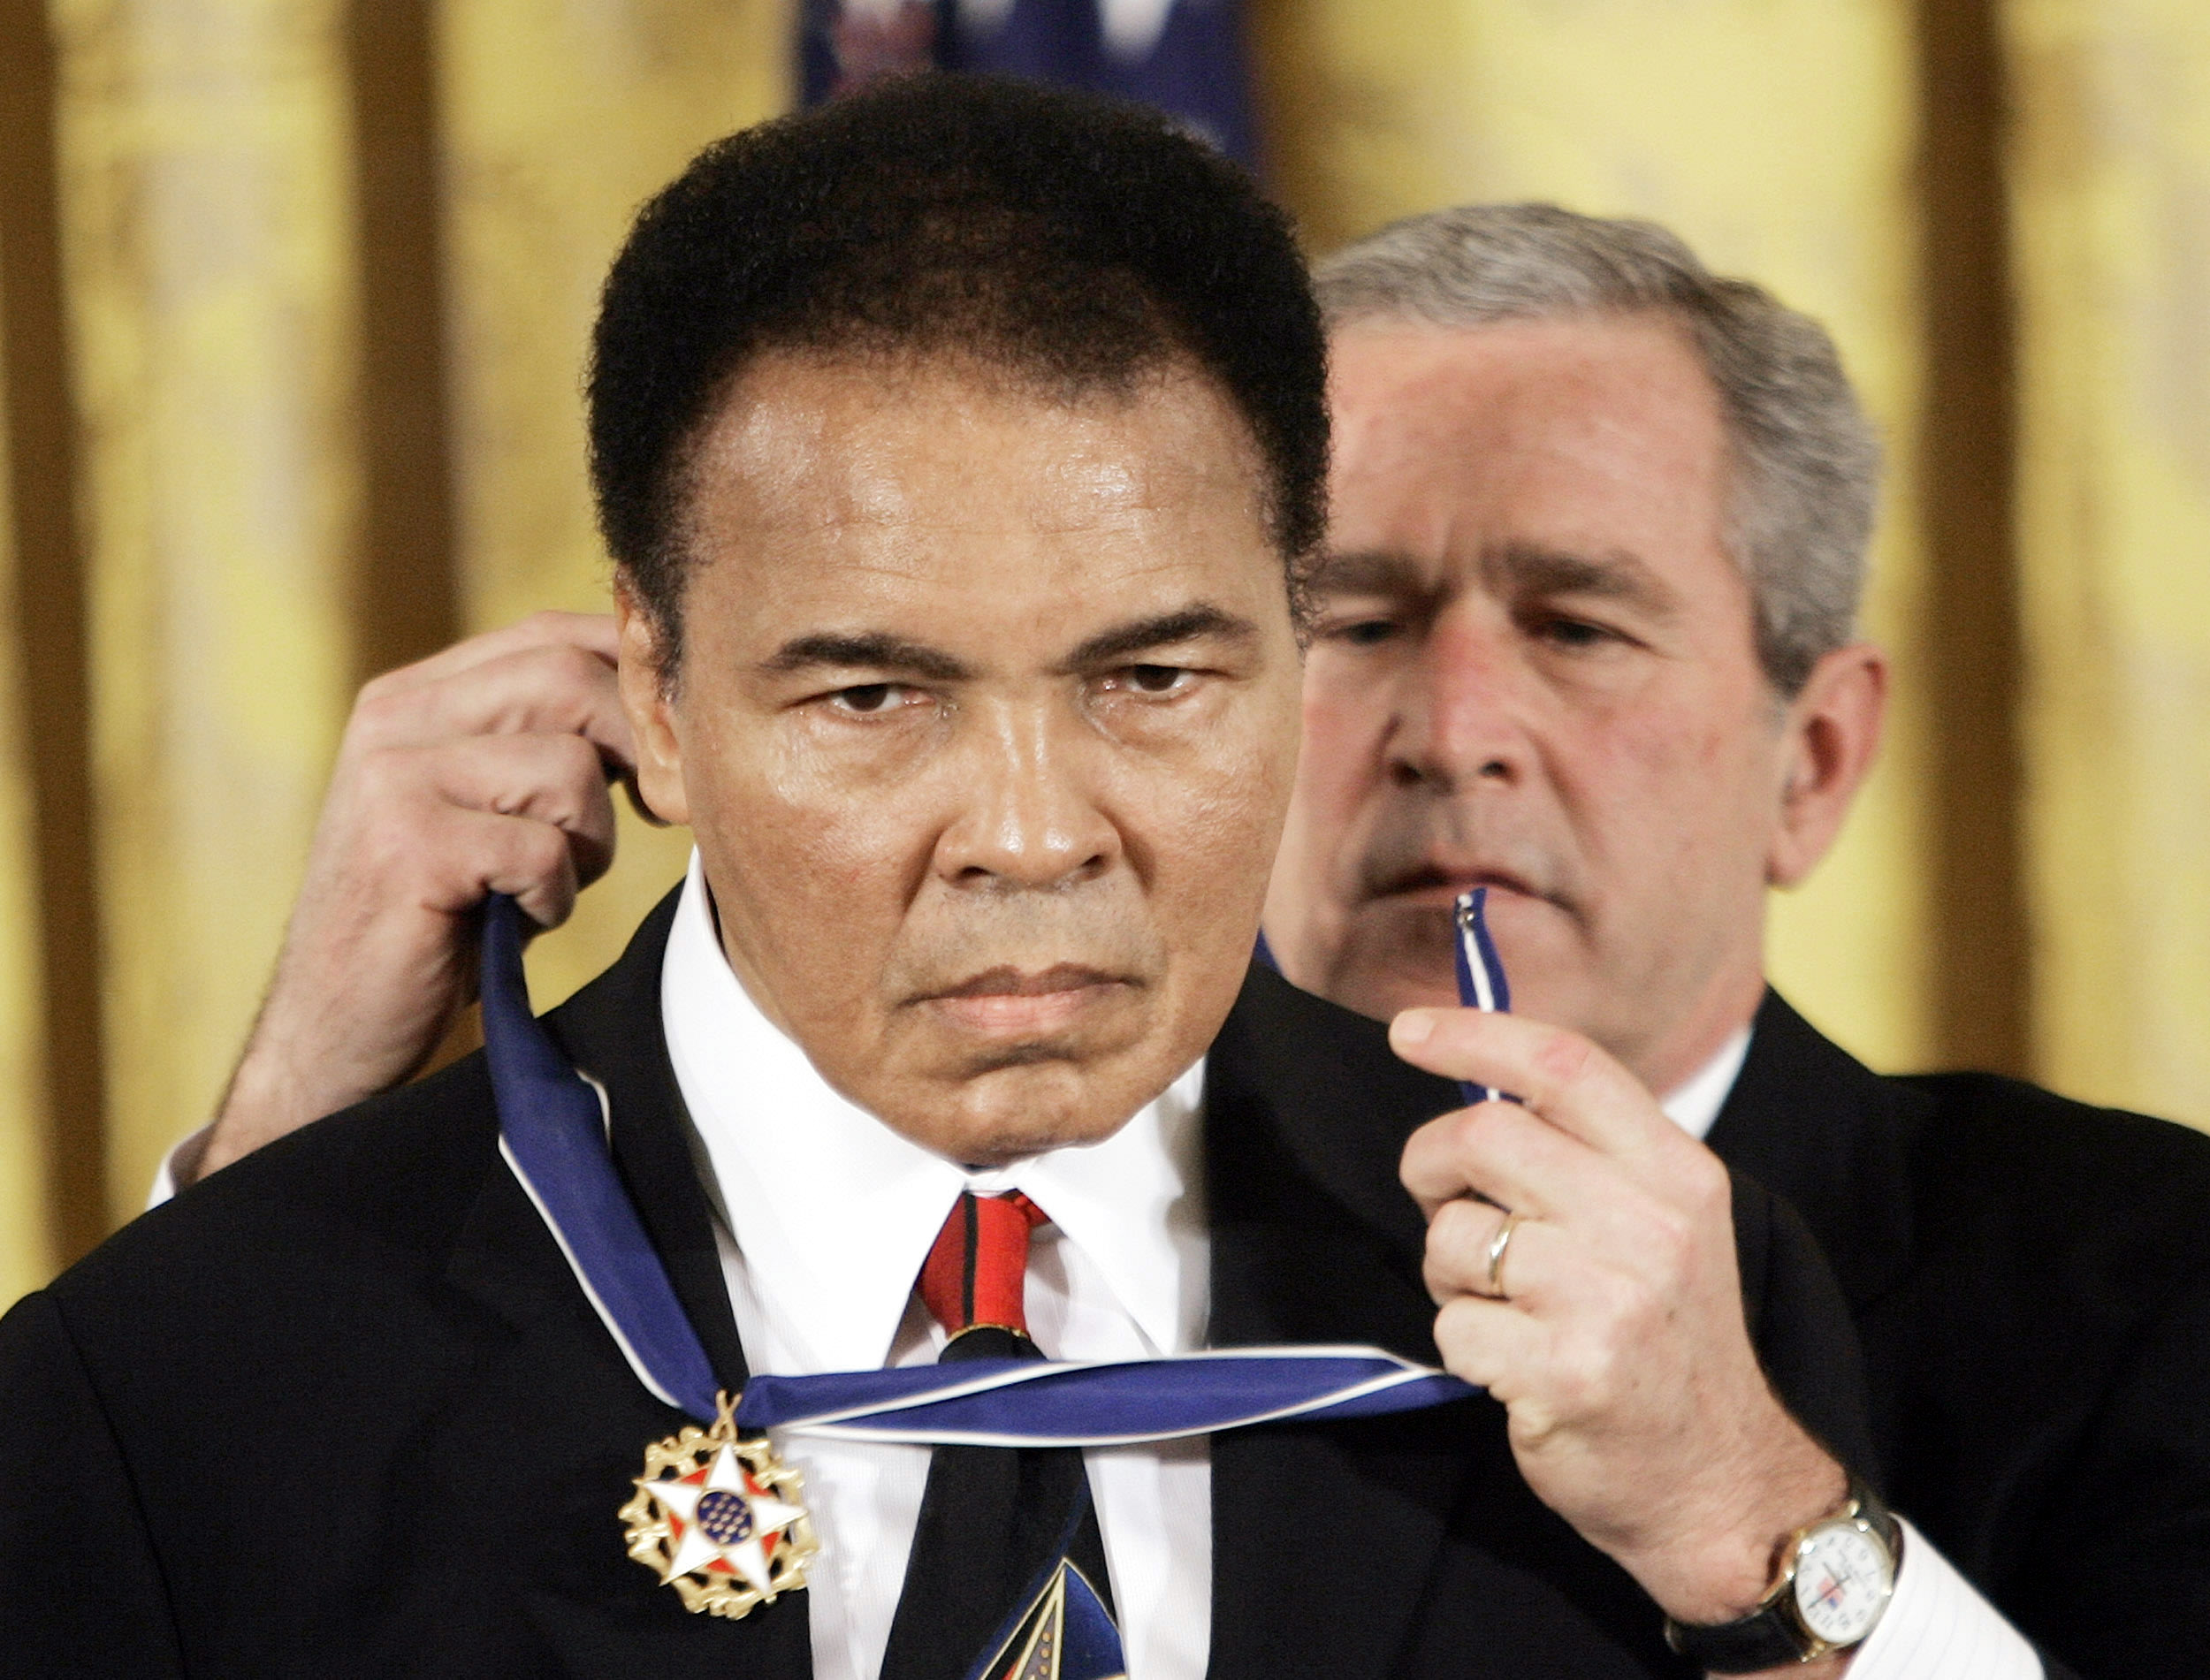 President Bush presents the Presidential Medal of Freedom to Muhammad Ali in 2005. (AP)